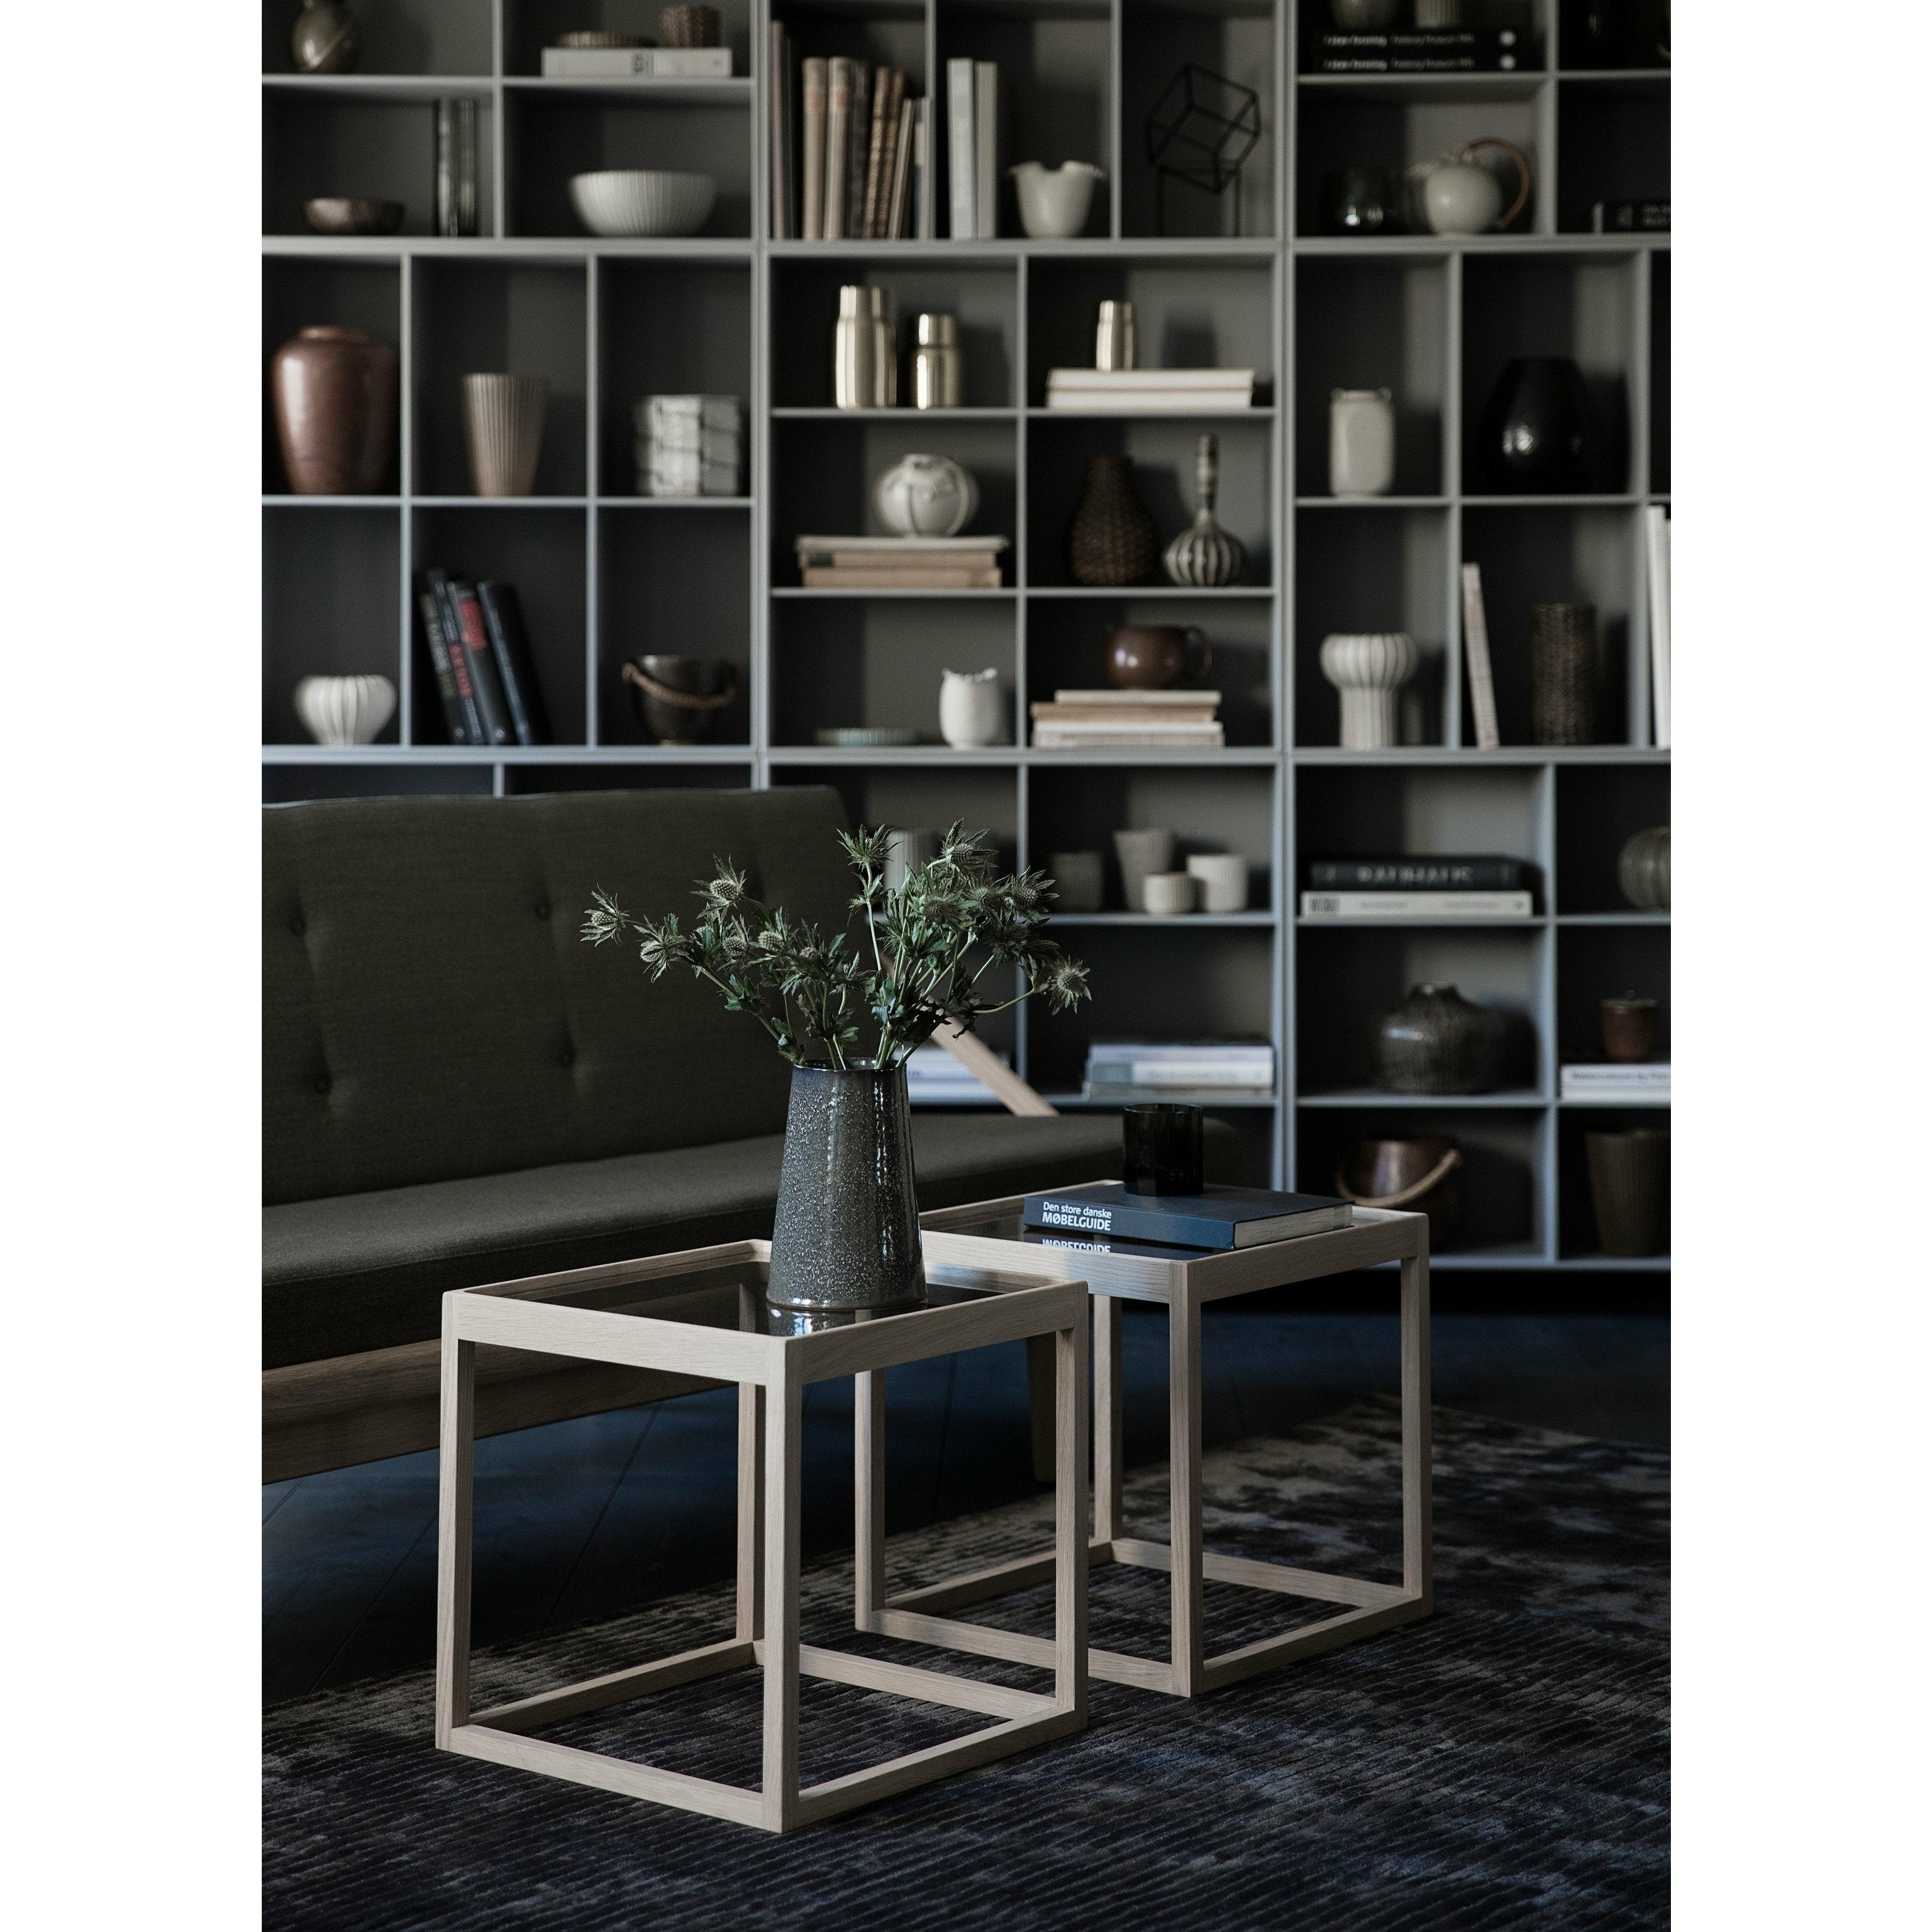 Klassik StudioKøucube边桌黑色烟熏橡木，浅灰色大理石